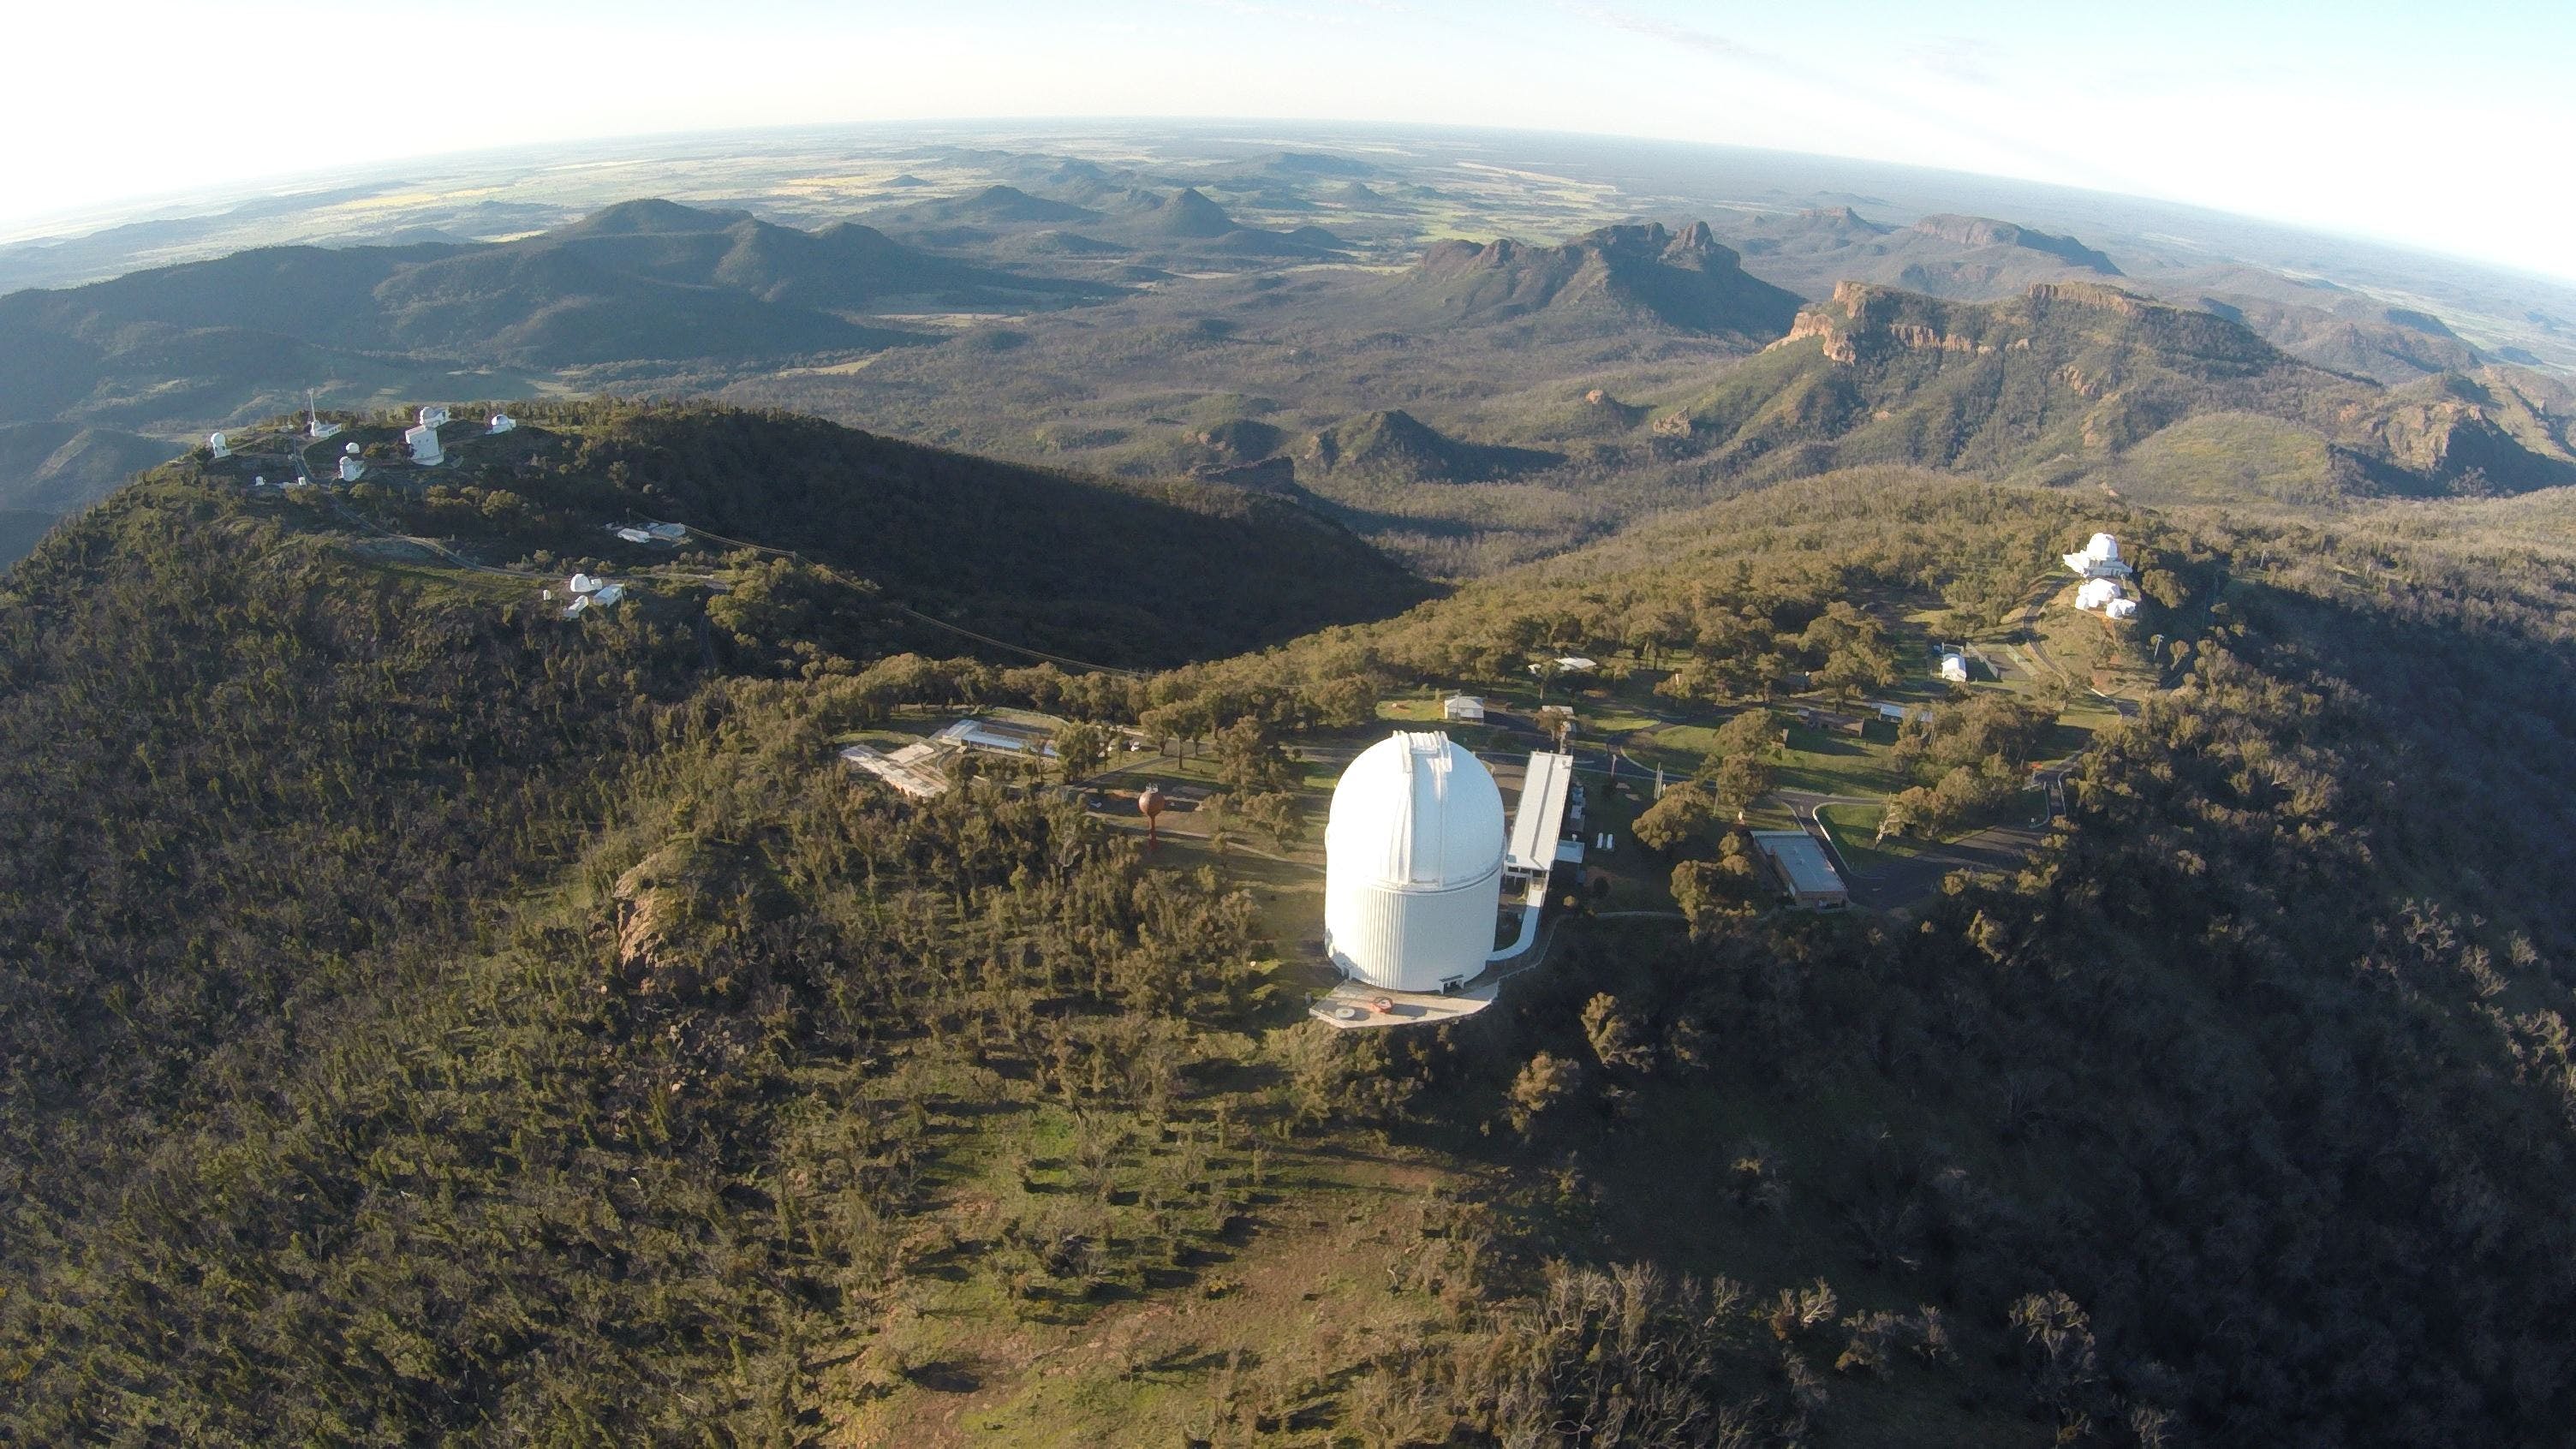 Siding Spring Observatory - Wagga Wagga Accommodation